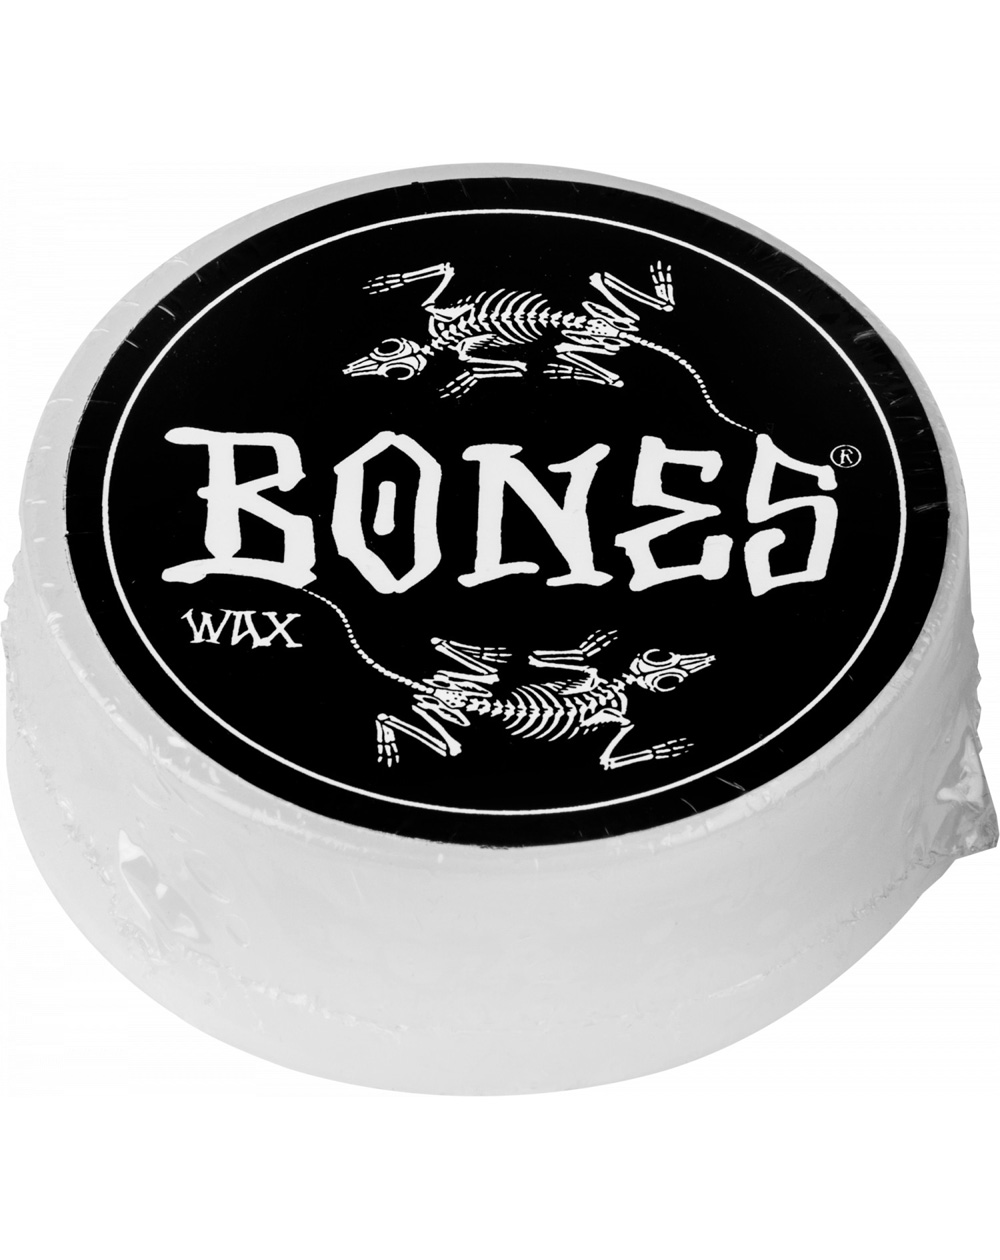 Bones Wheels Vato Rax Skateboard Wax White